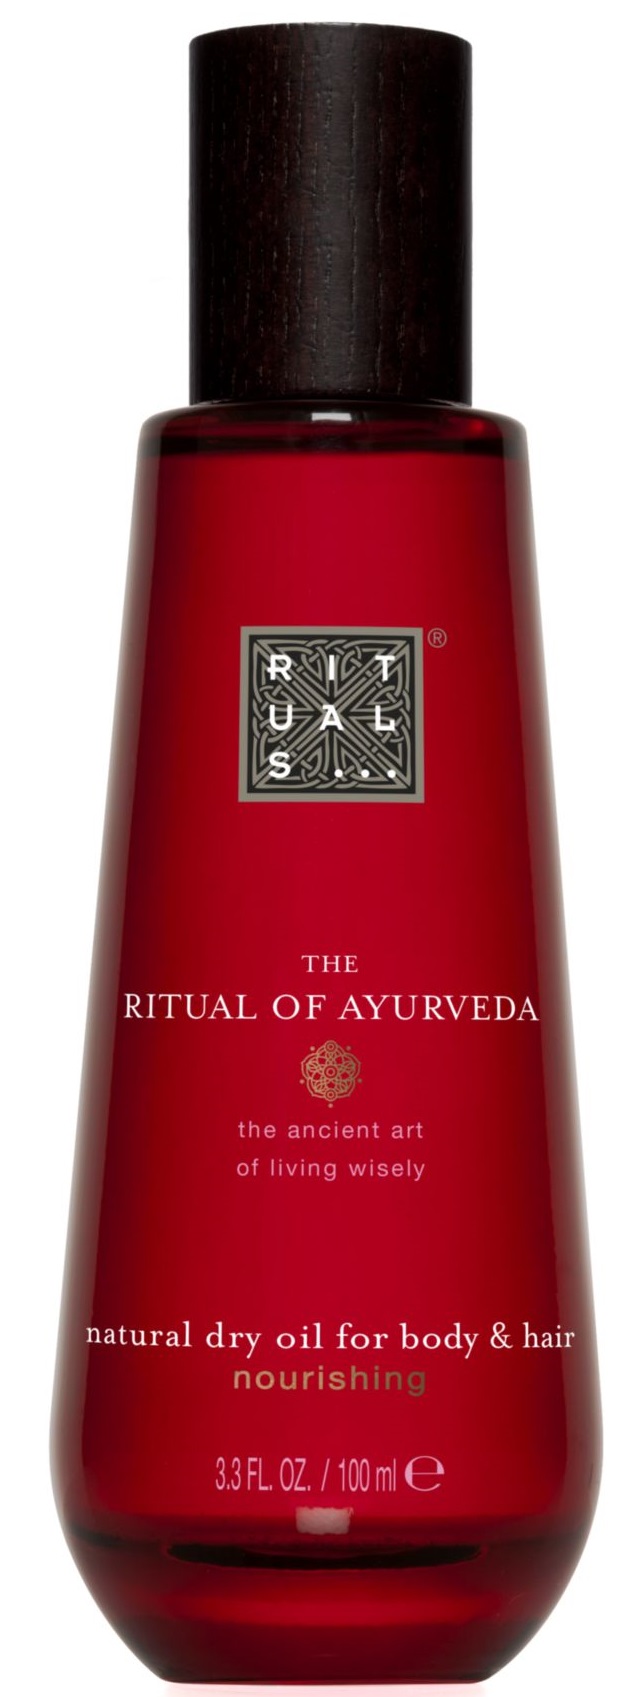 Rituals-The-Ritual-of-Ayurveda-Vata-Oil